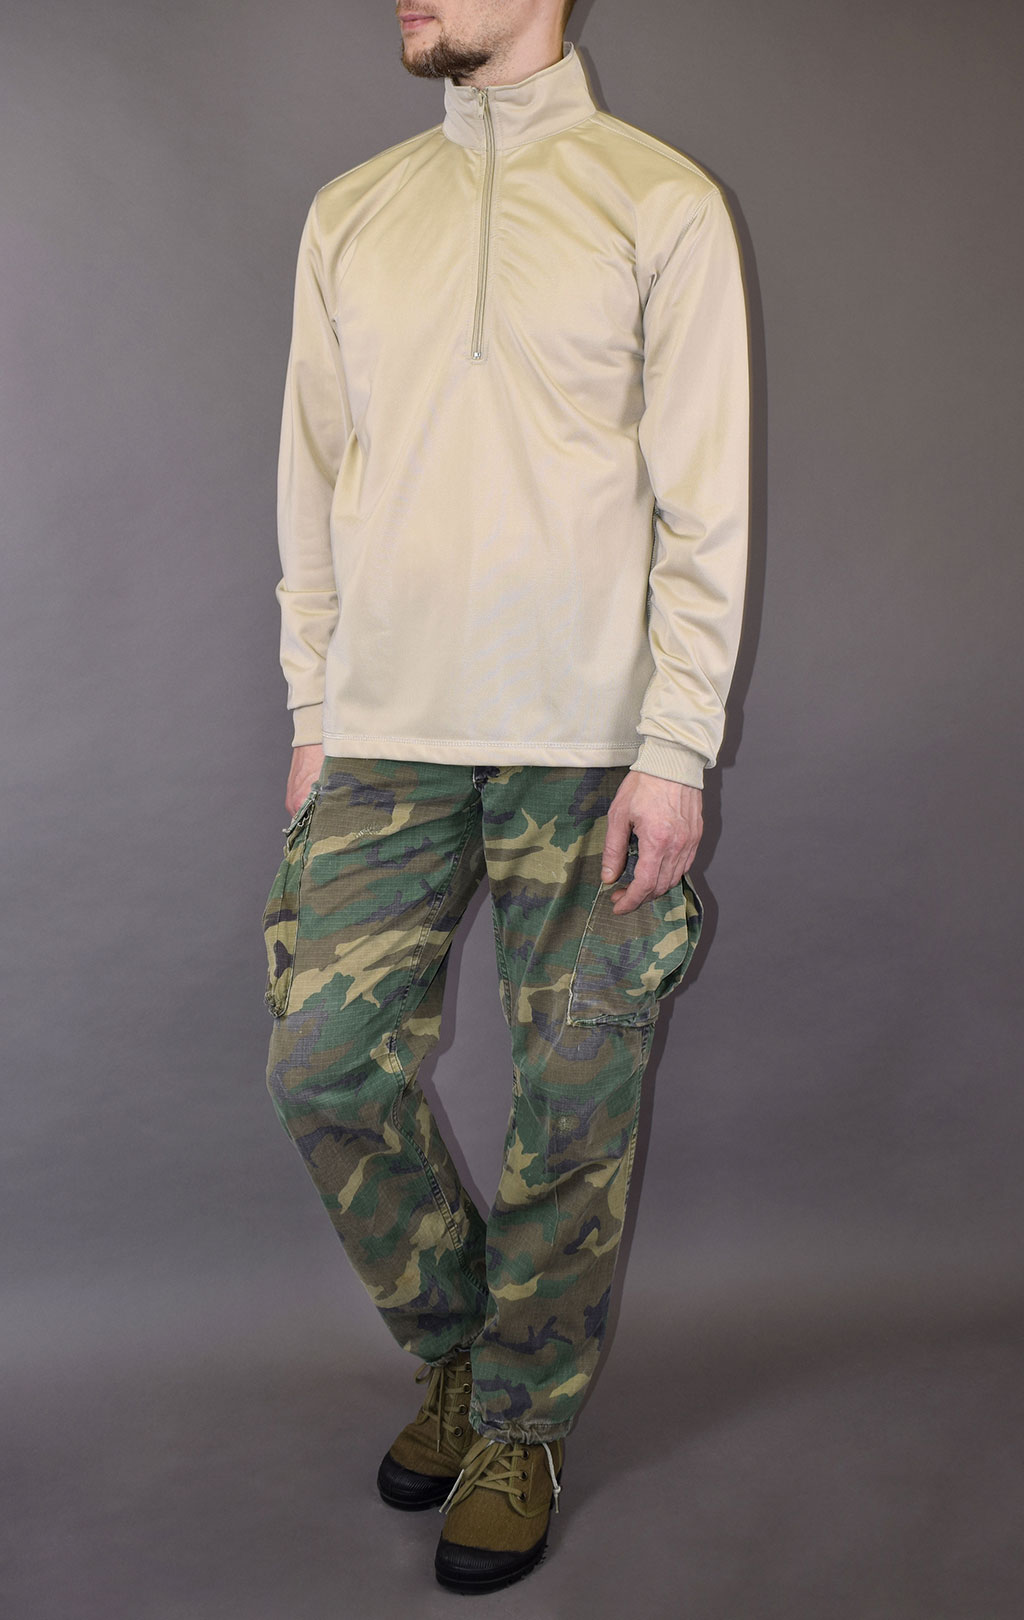 Термобельё кофта армейское Shirt Sleeping полиэстр khaki США